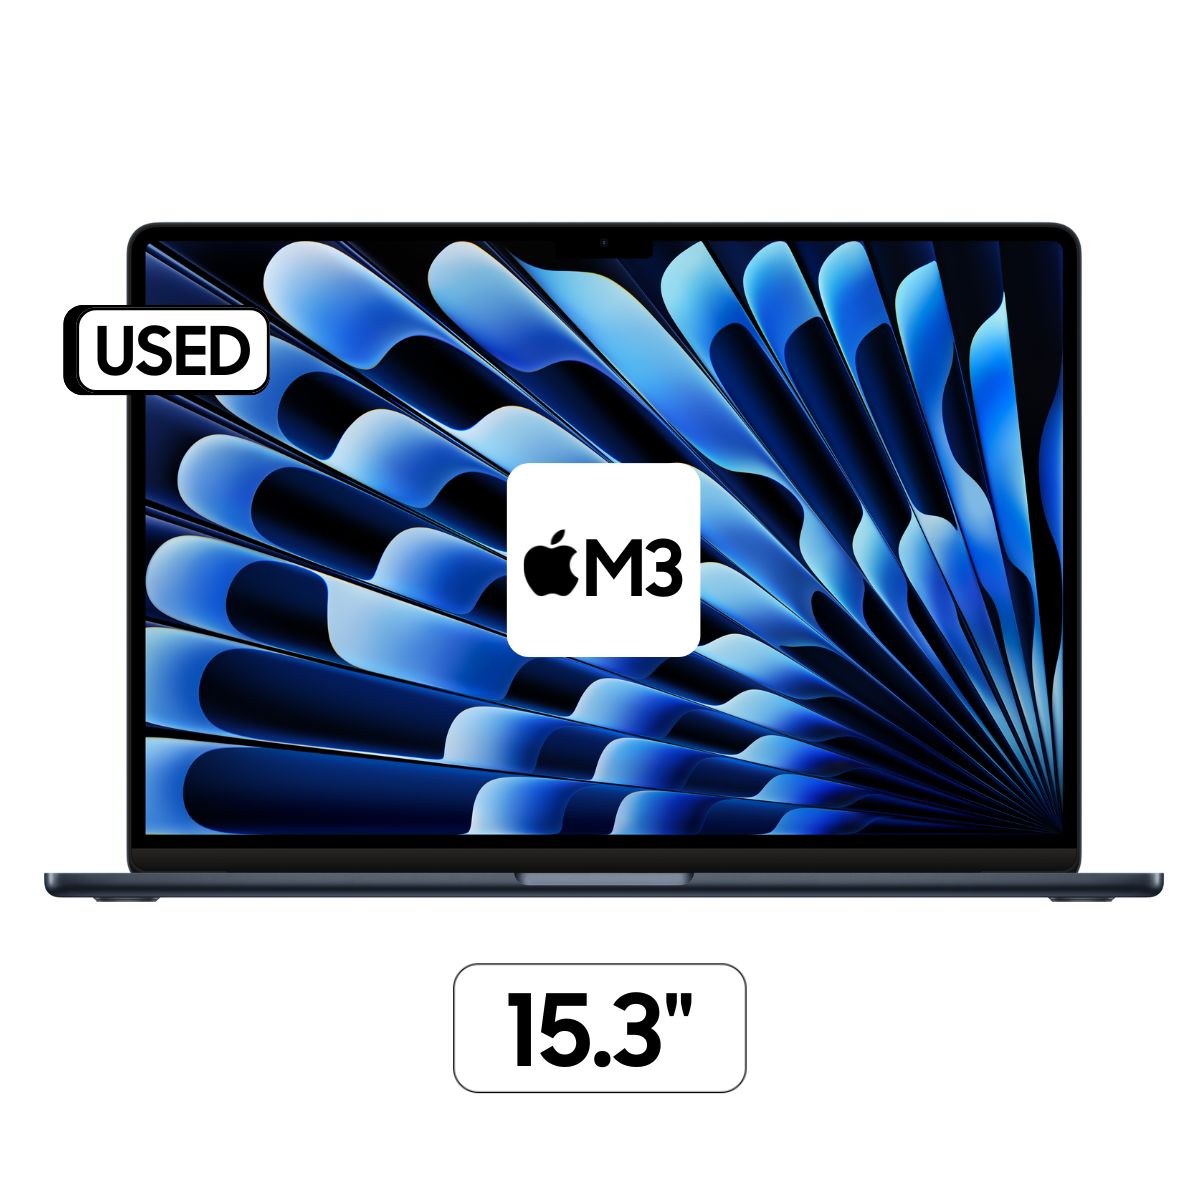 MacBook Air M3 15 inch USED